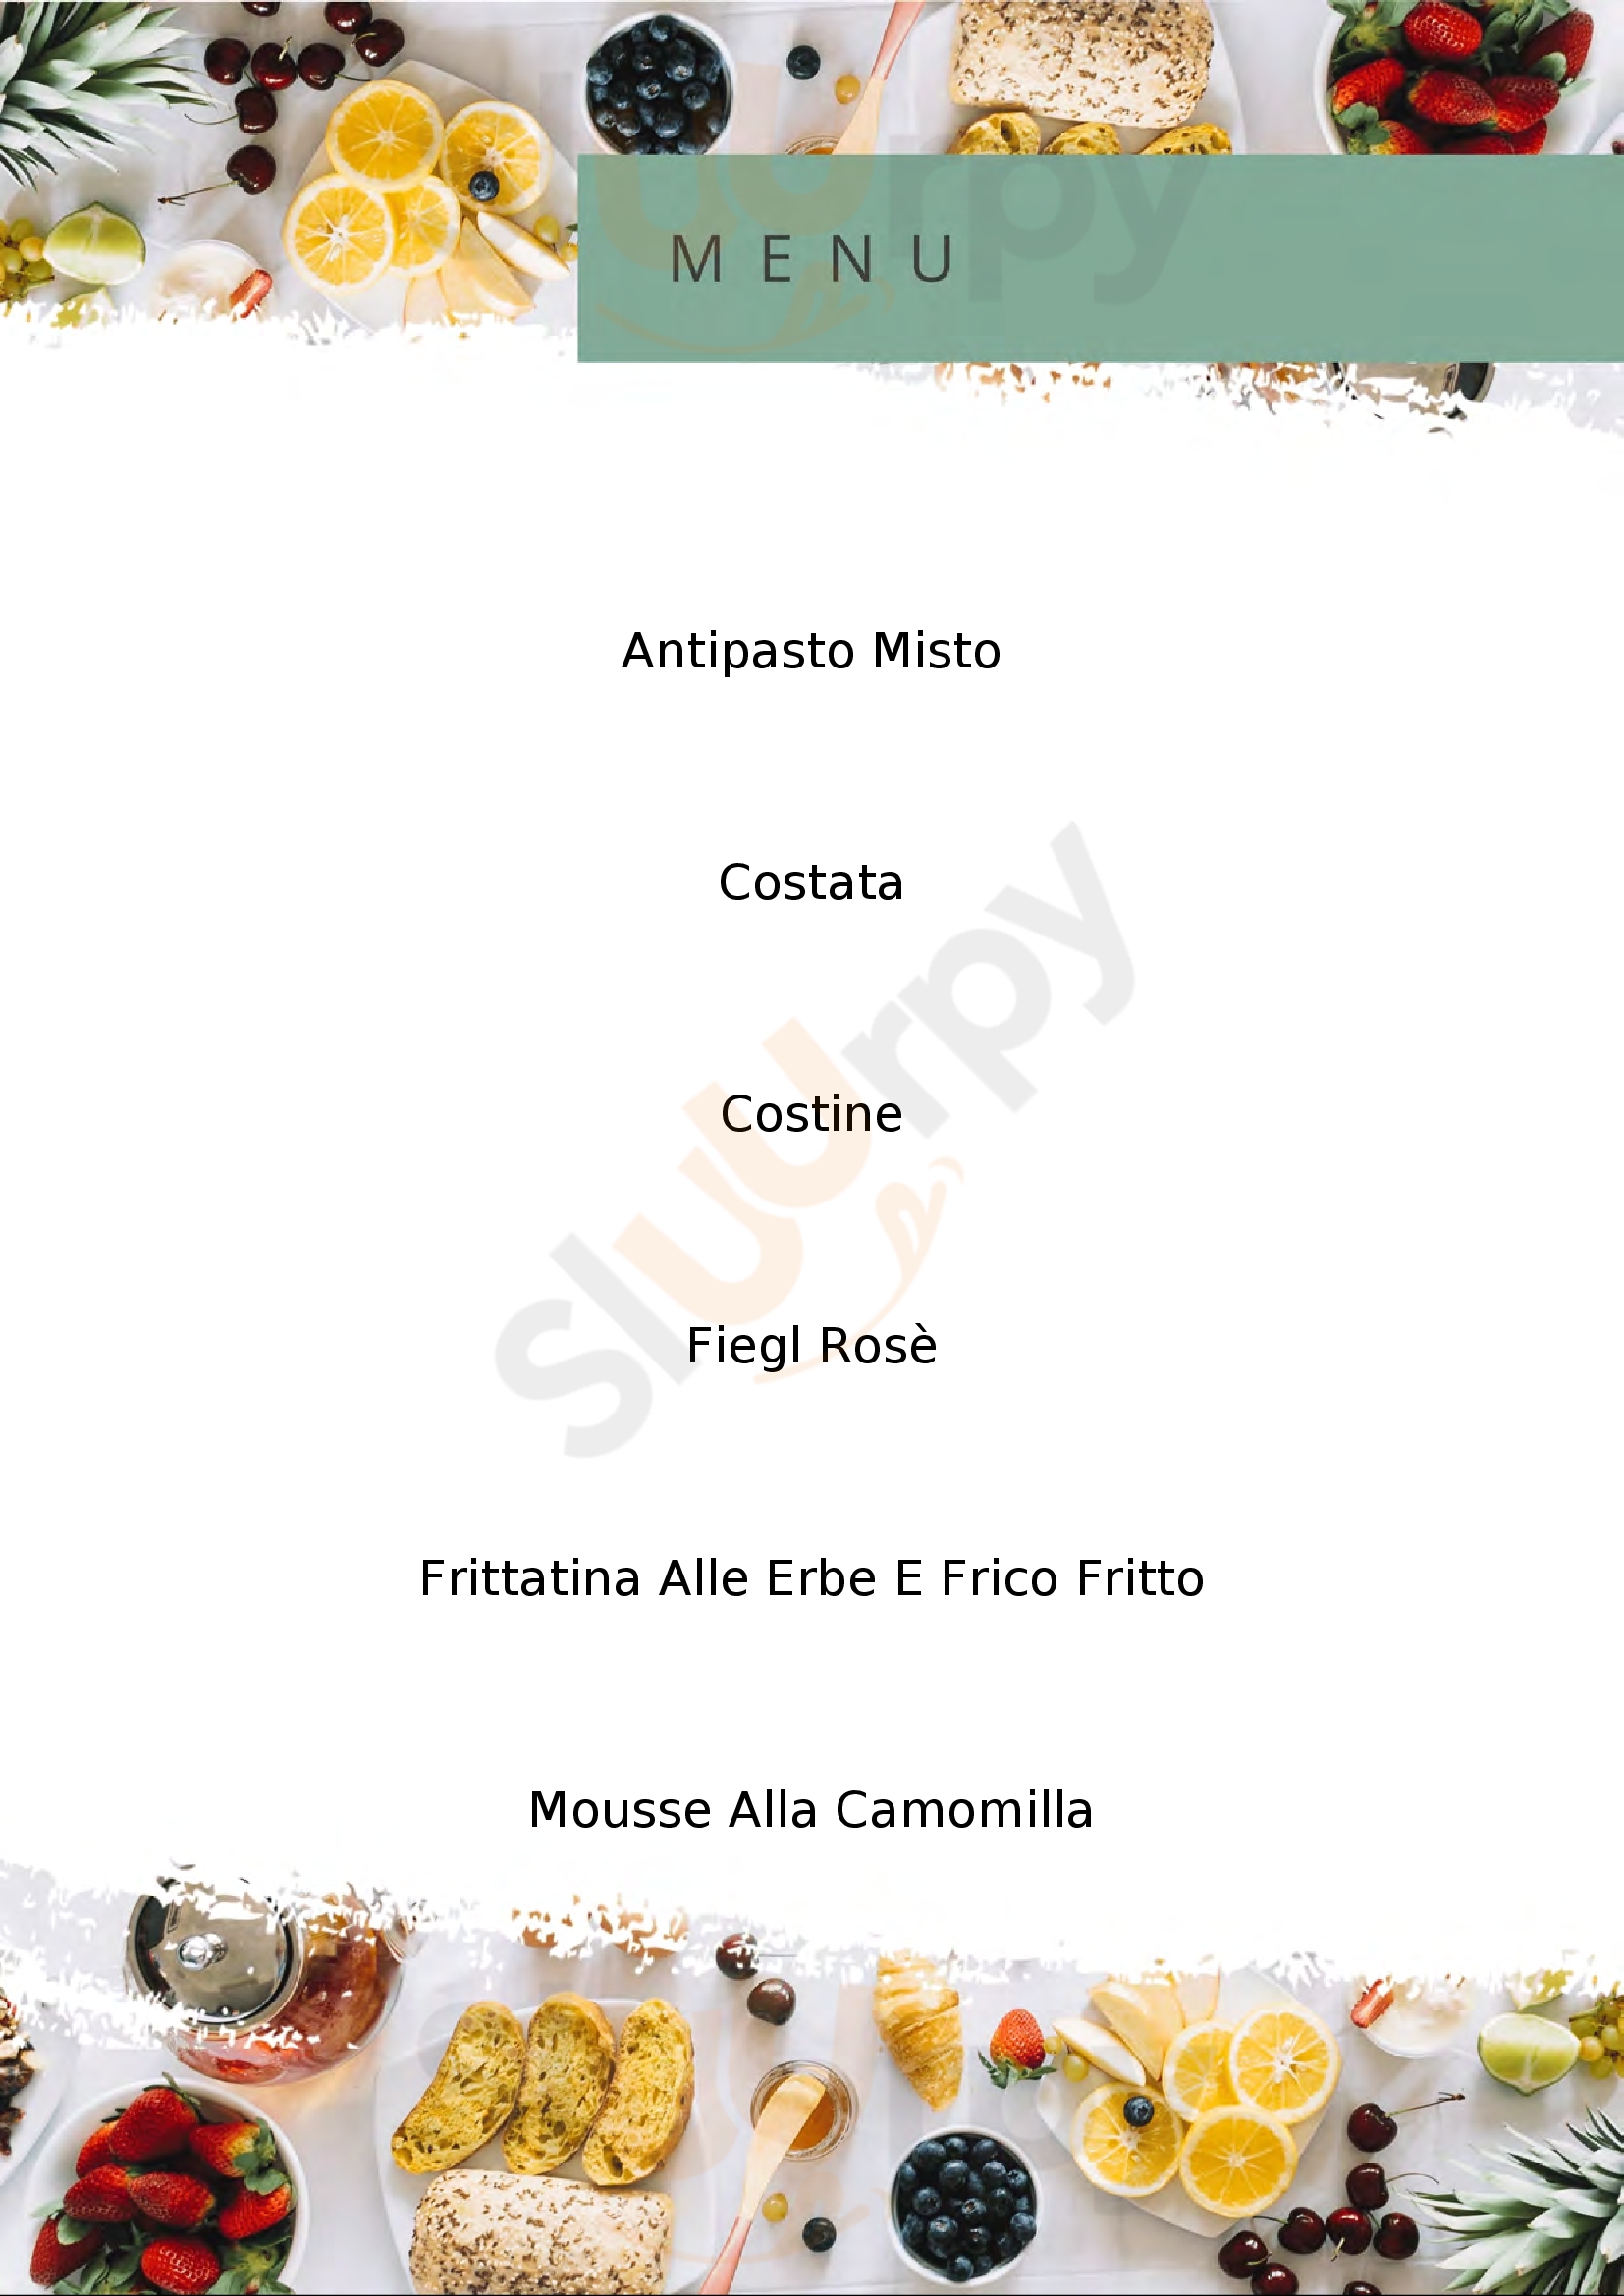 DVOR Osteria-Enoteca San Floriano del Collio menù 1 pagina